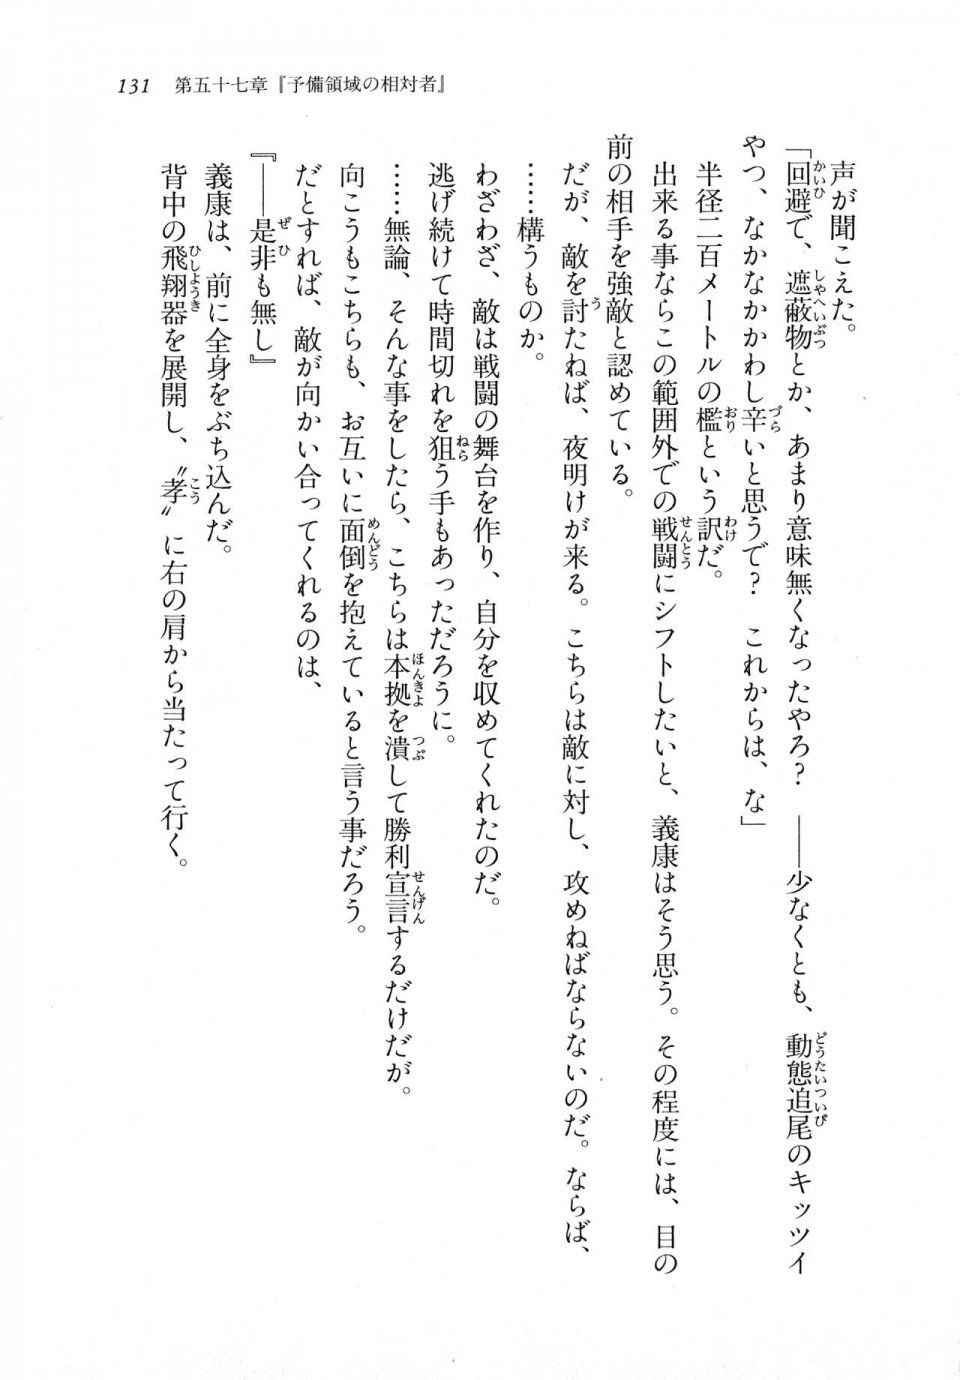 Kyoukai Senjou no Horizon LN Vol 18(7C) Part 1 - Photo #131